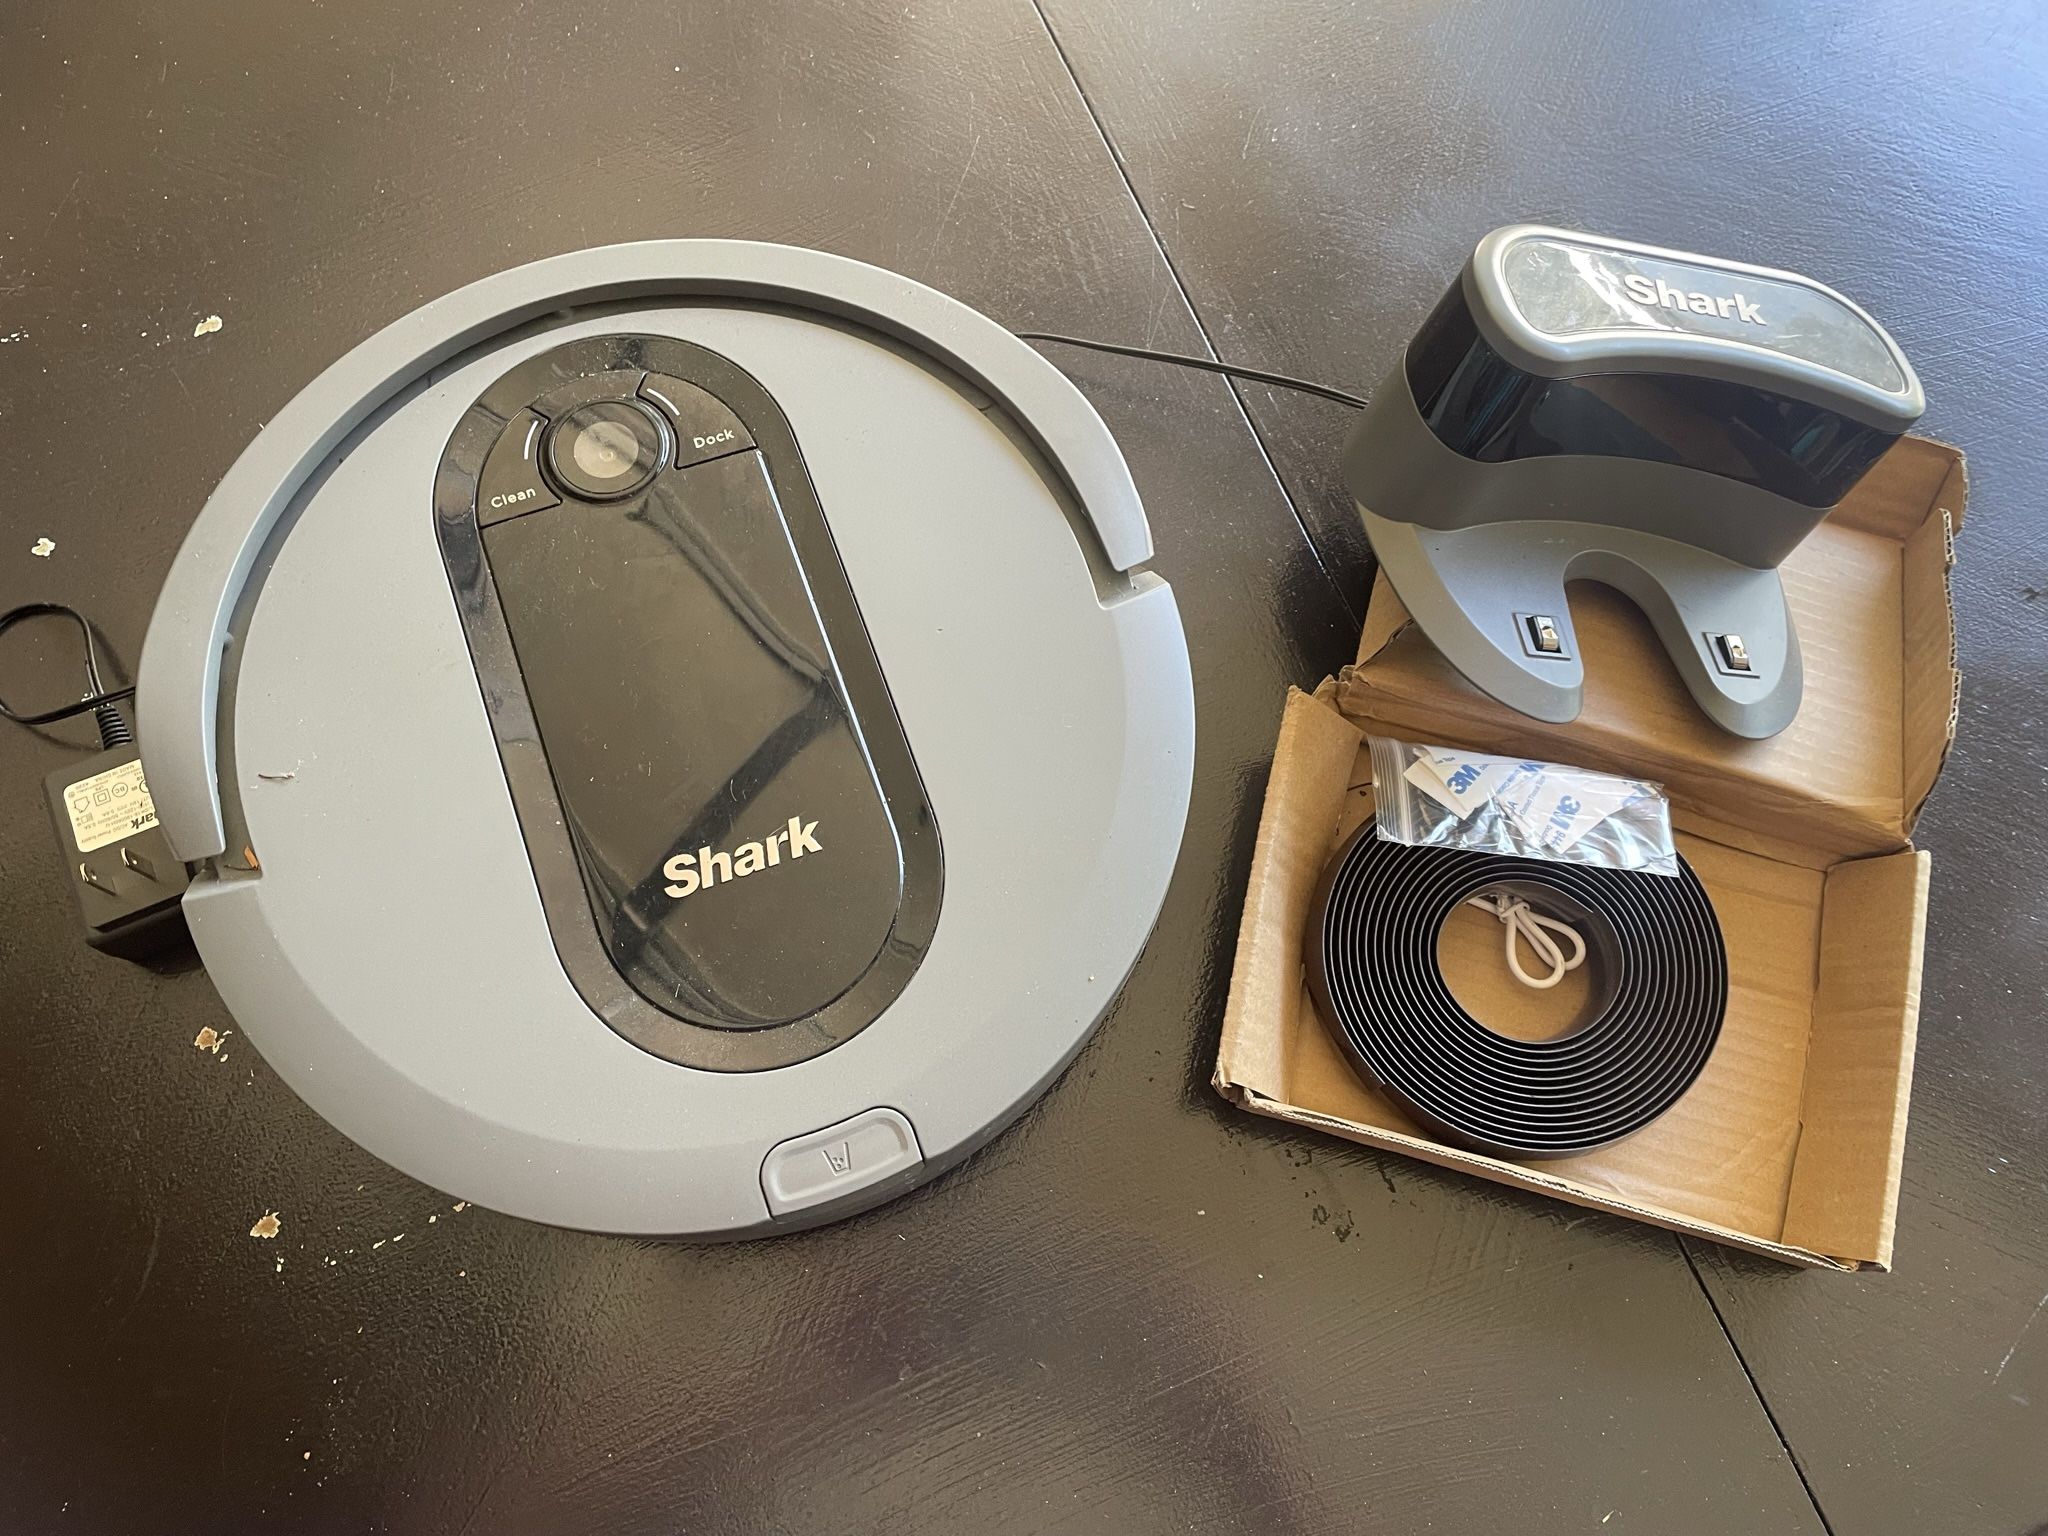 Shark IQ Robot Vacuum AV970 Self Cleaning Brushroll, Advanced Navigation, Perfect for Pet Hair, Works with Alexa, Wi Fi, xl dust bin, A black finish